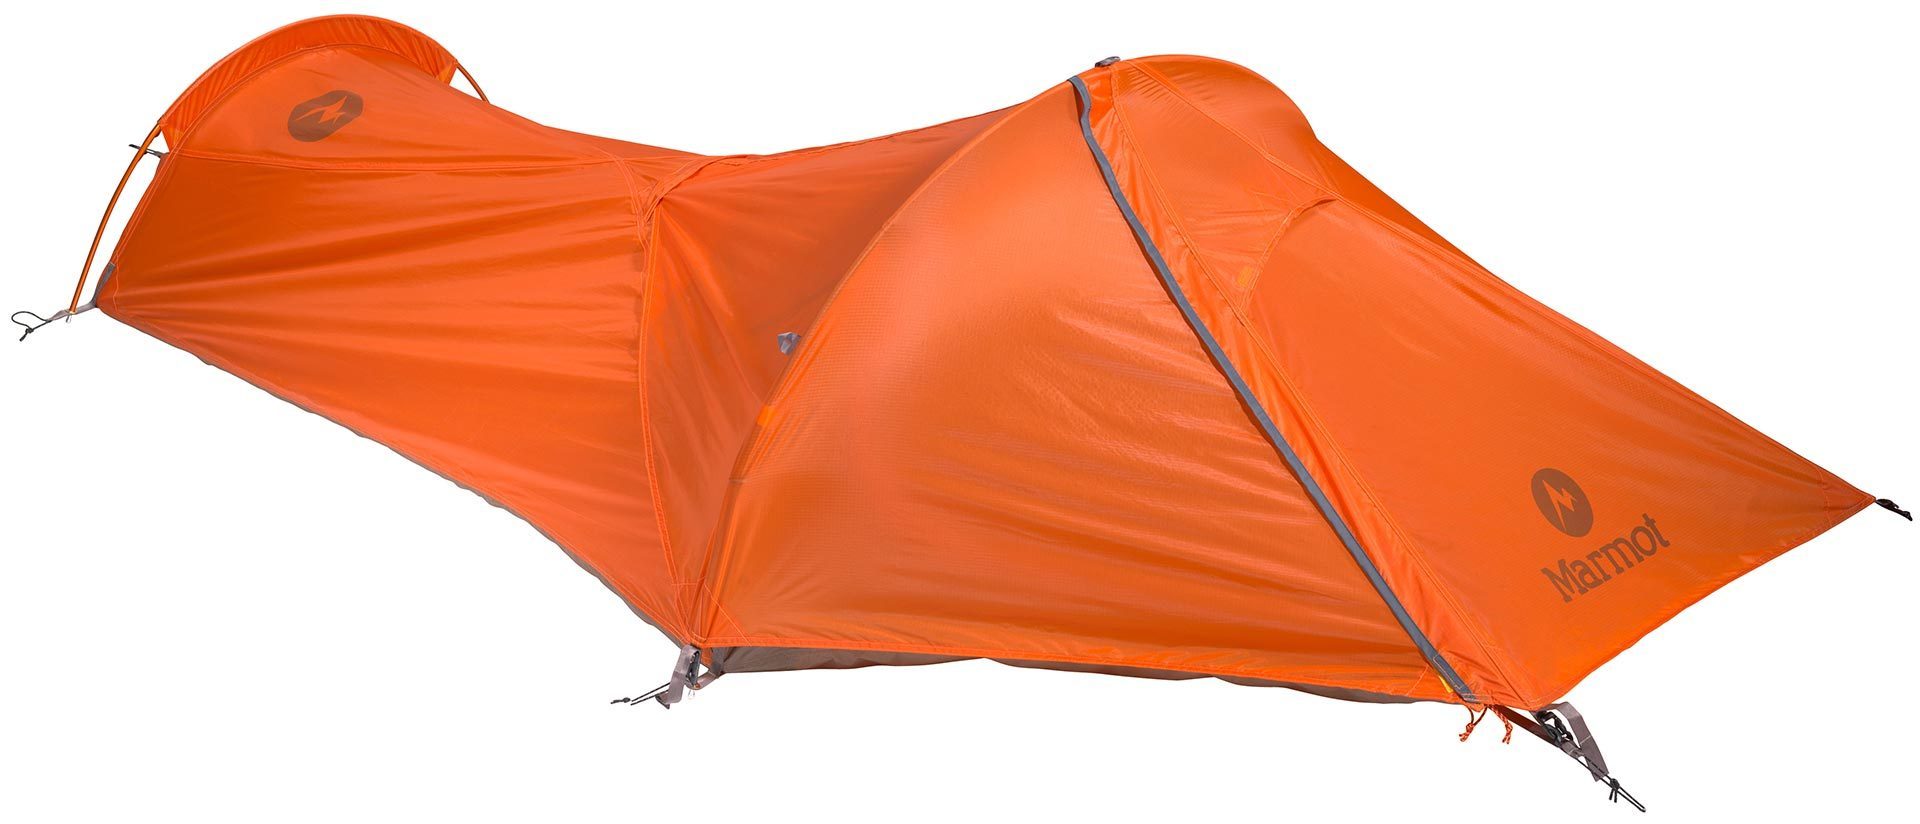 Marmot - Одноместная палатка Starlight 1P